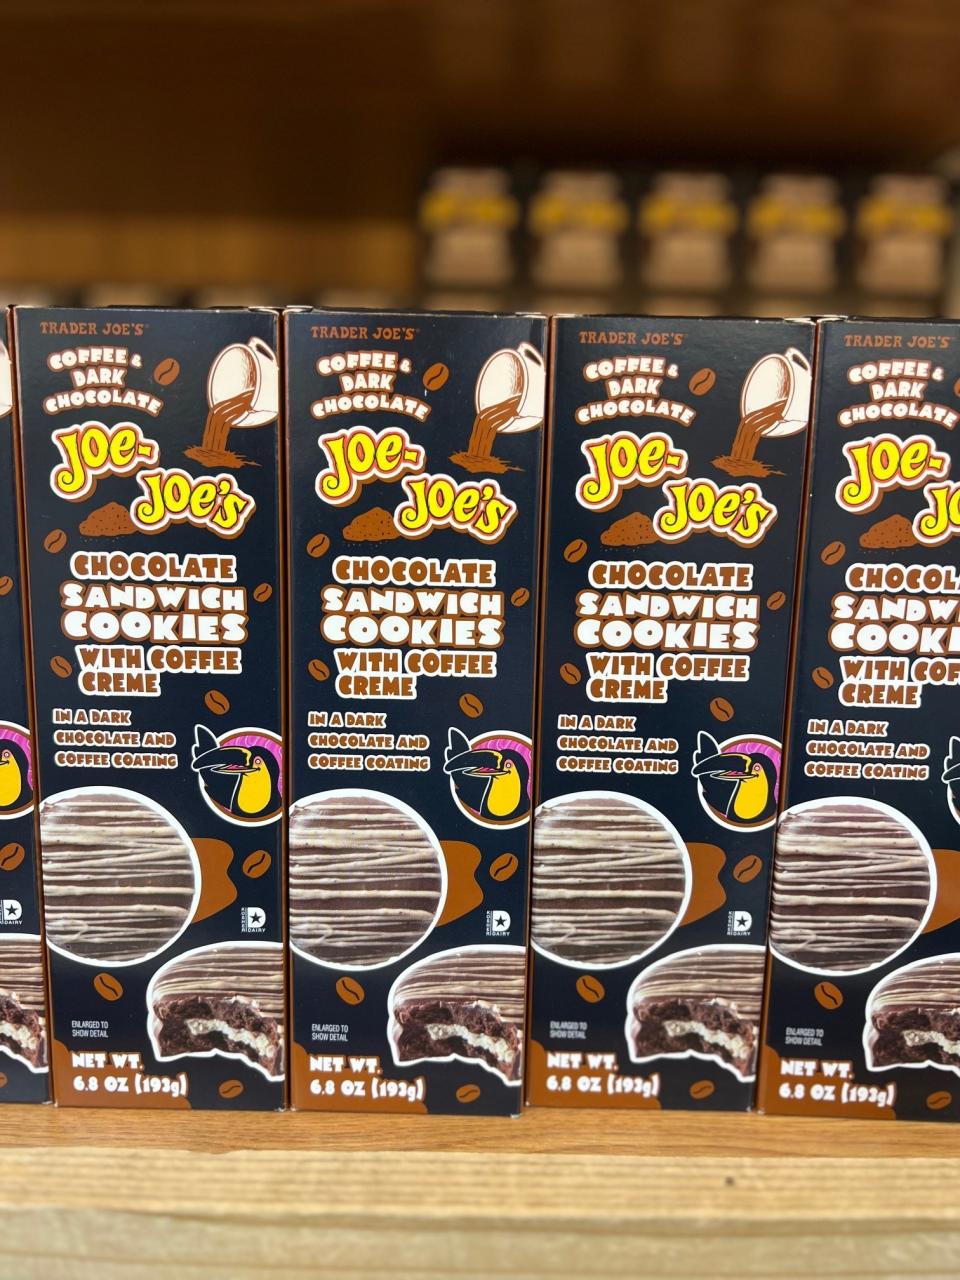 Coffee & Dark Chocolate Joe-Joe's Chocolate Sandwich Cookies With Coffee Creme: "in a dark chocolate and coffee coating"